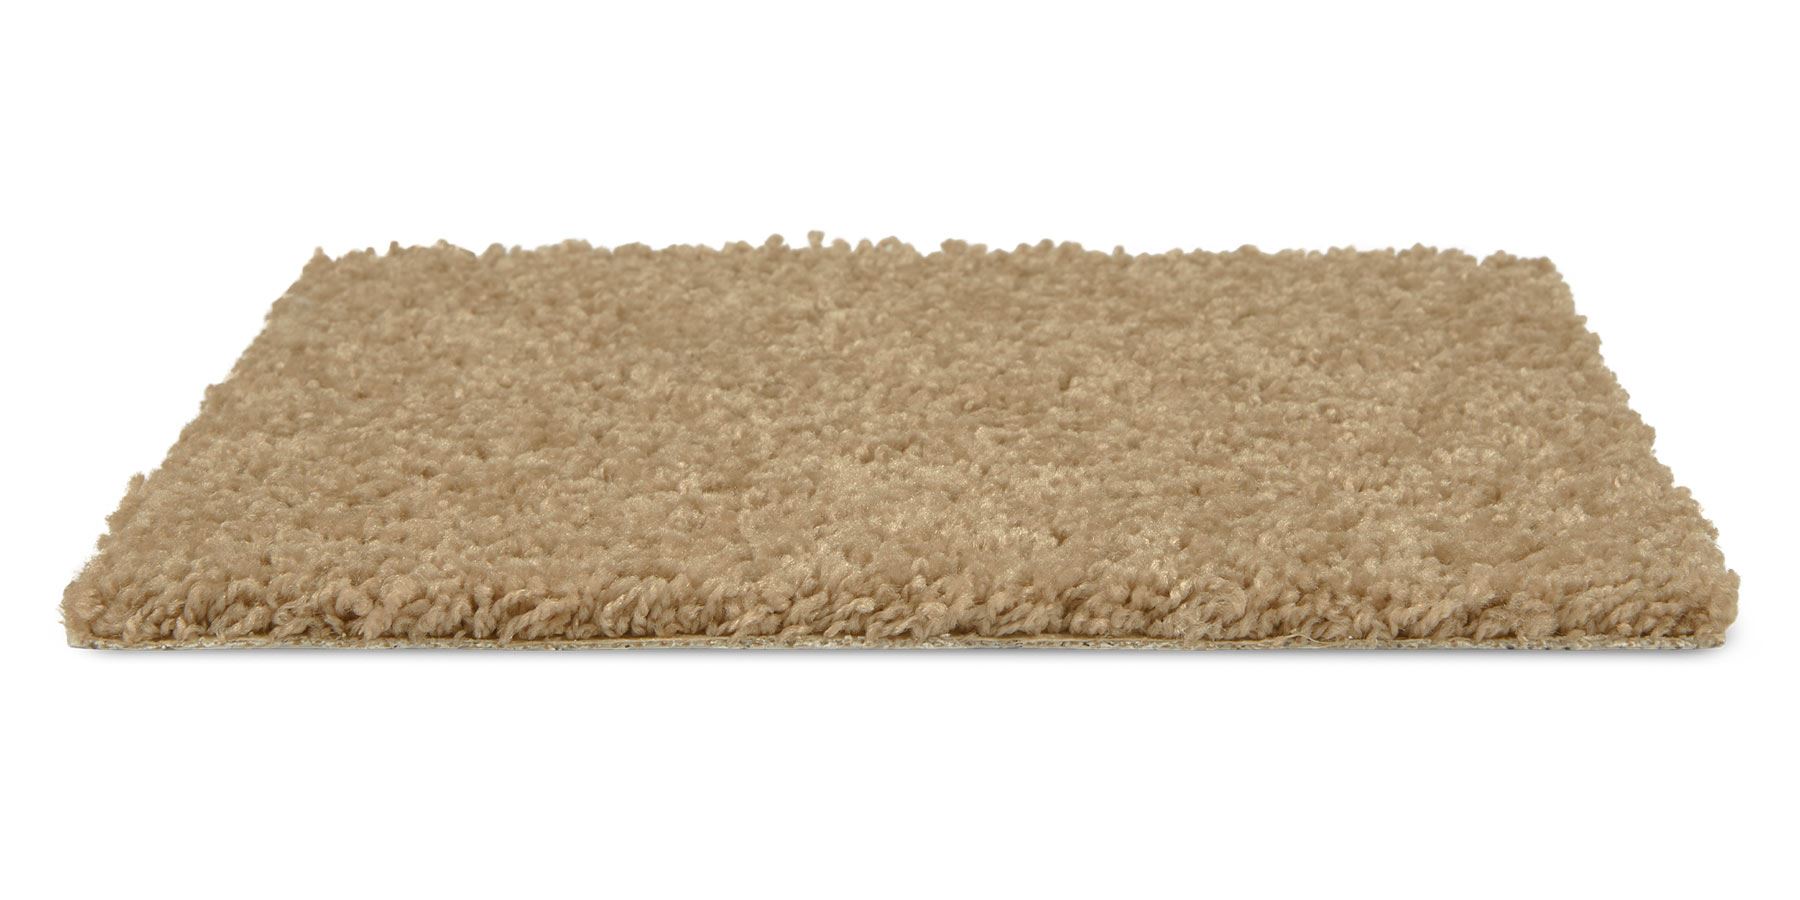 Winhaven Plush Carpet